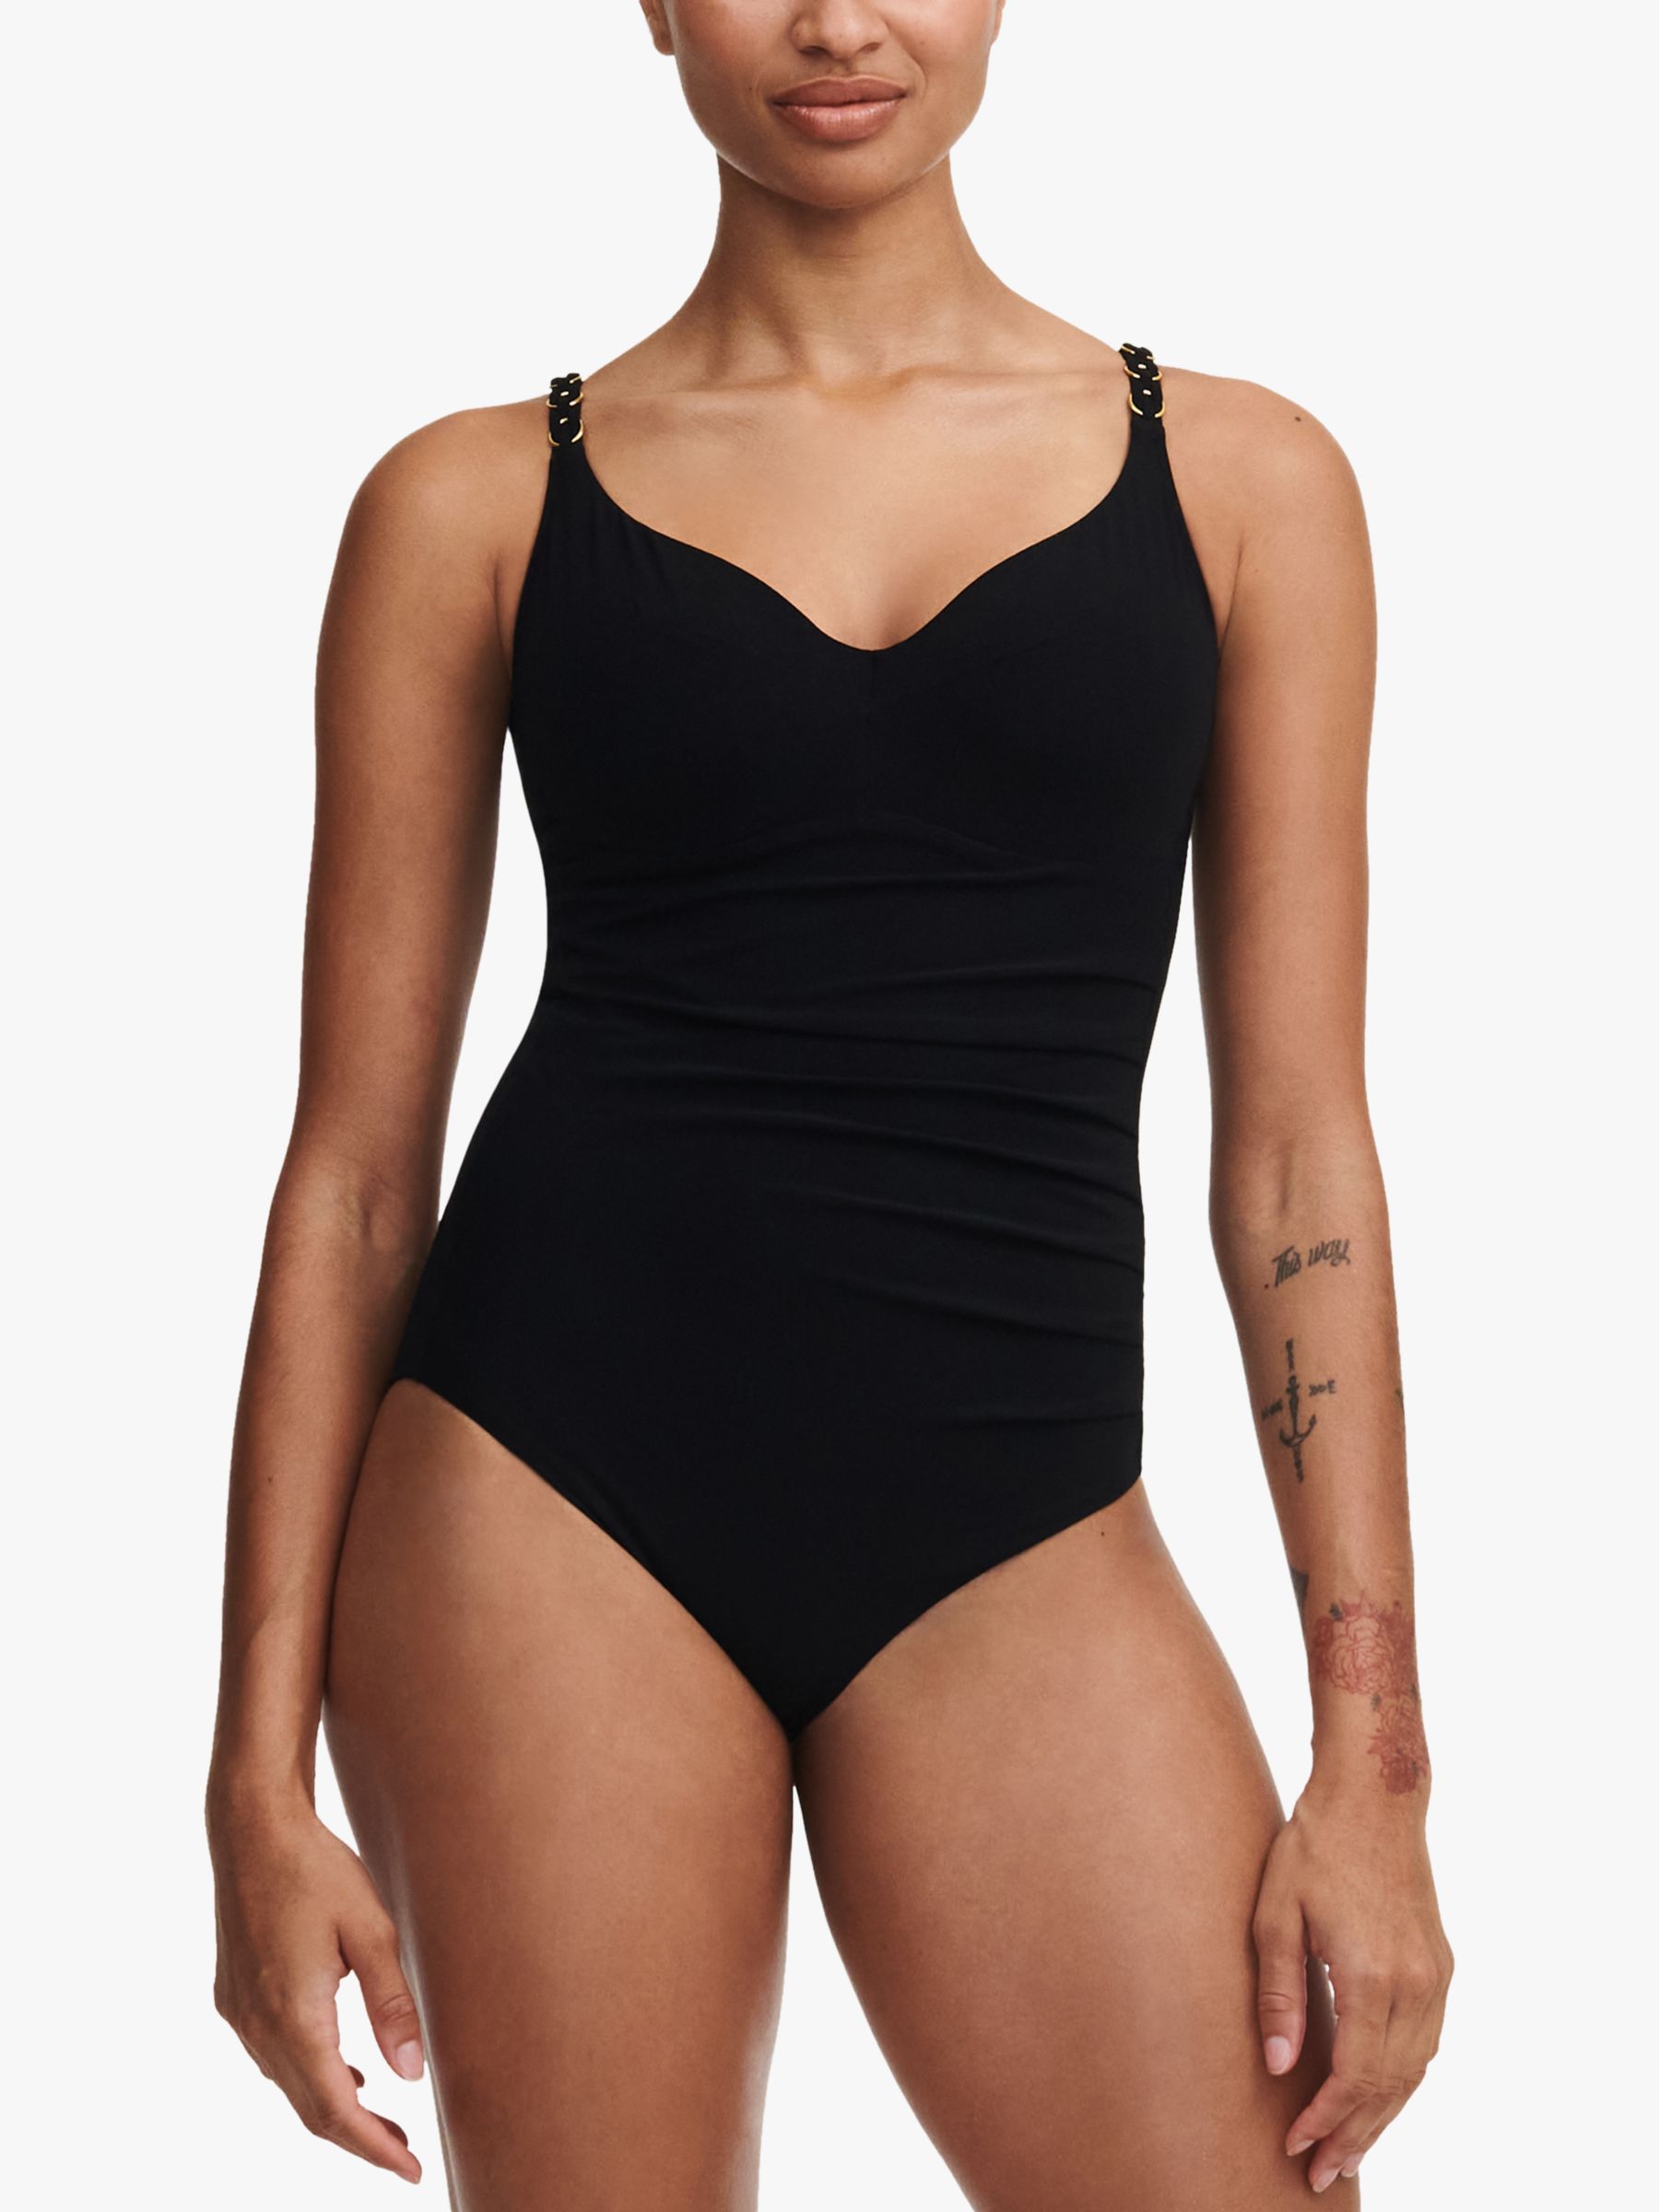 Chantelle Emblem Underwired Swimsuit, Black, 38DD